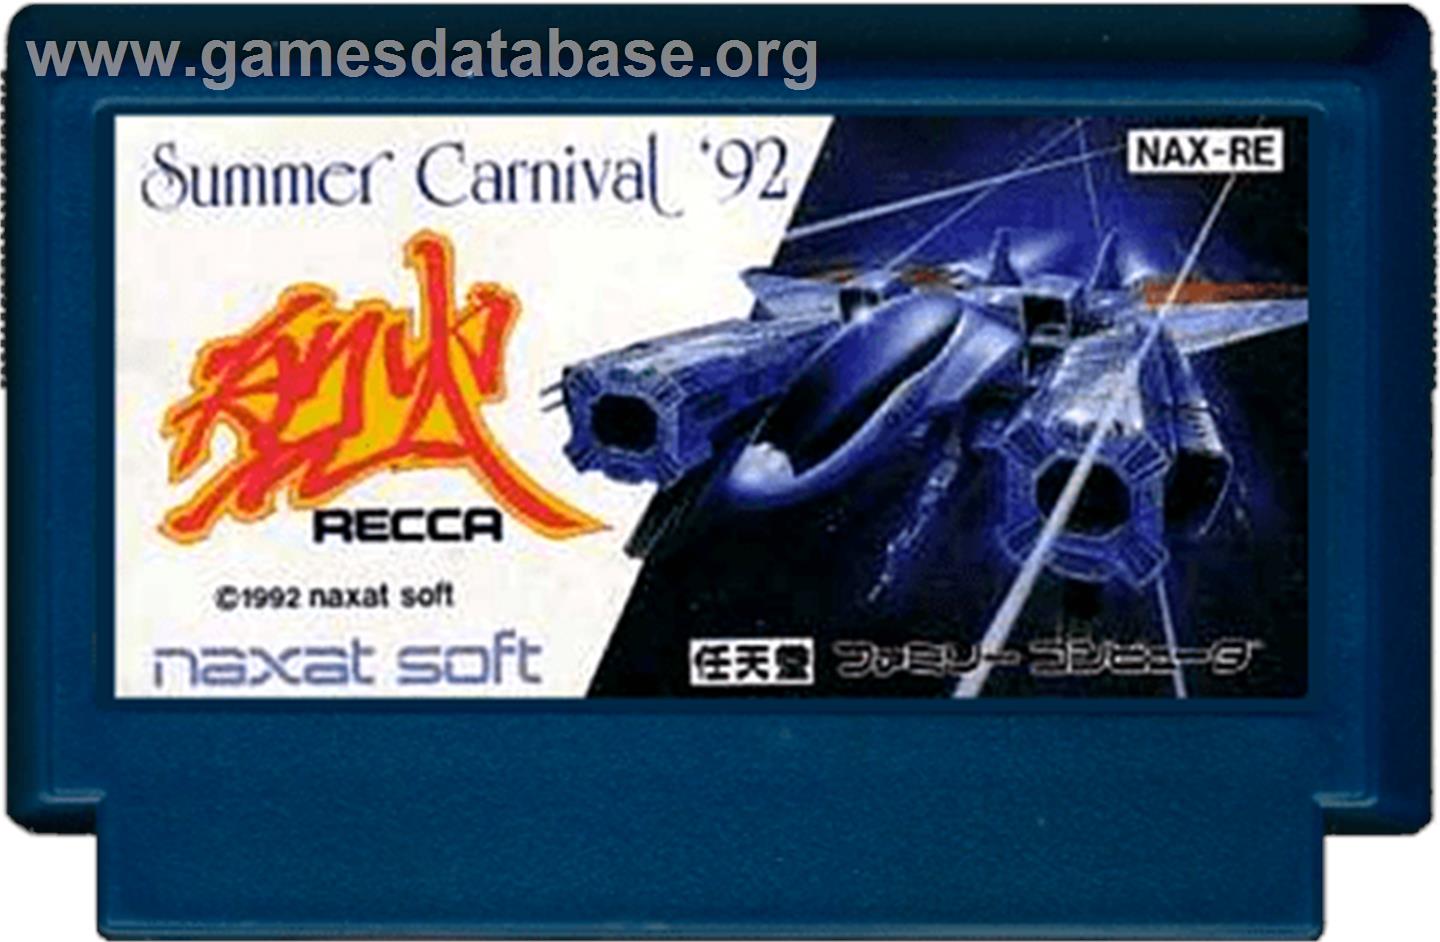 Summer Carnival '92 - Recca - Nintendo NES - Artwork - Cartridge